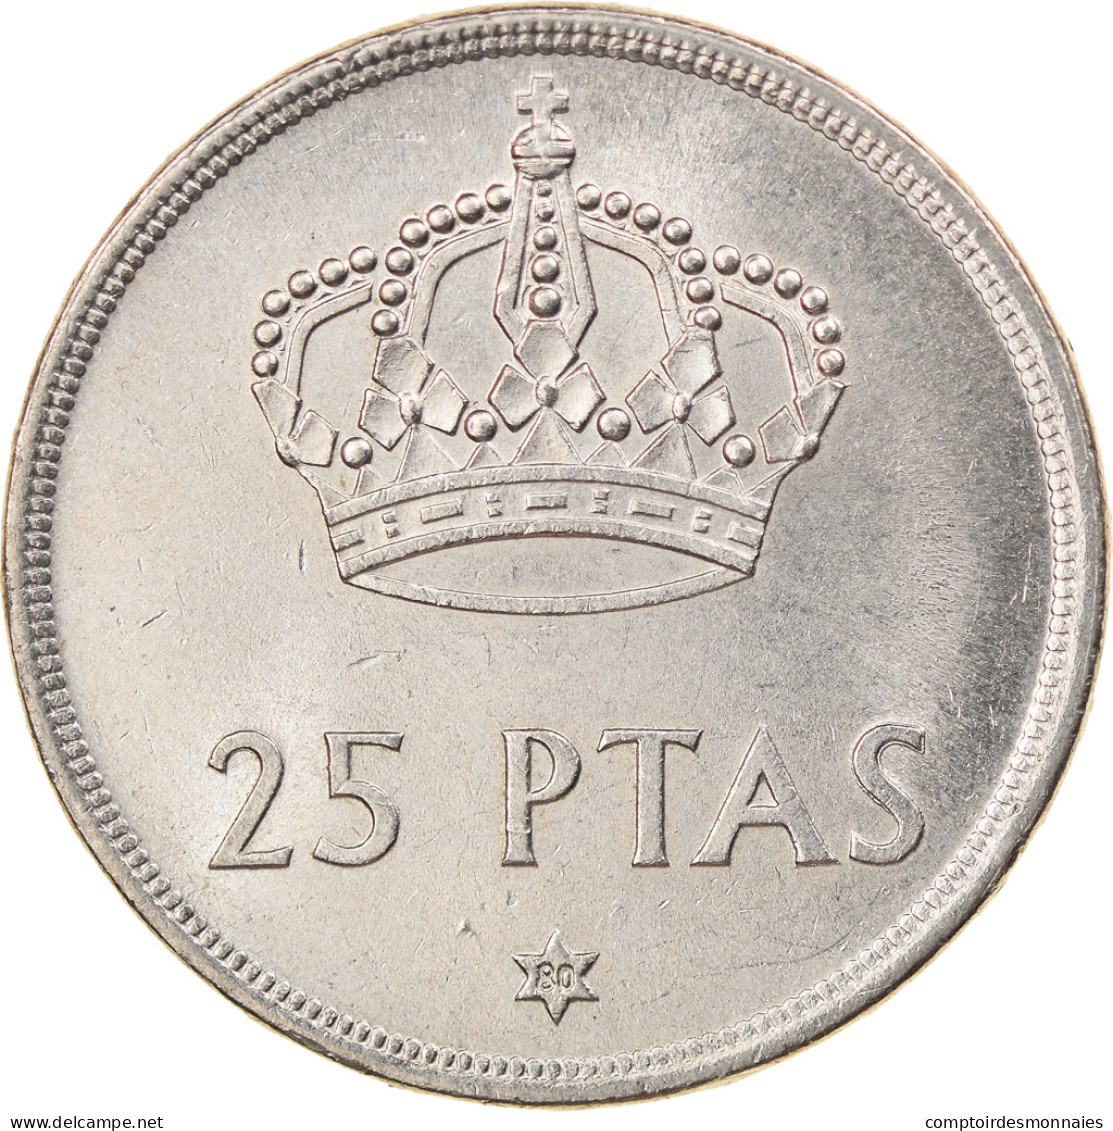 Monnaie, Espagne, Juan Carlos I, 25 Pesetas, 1980, SUP, Copper-nickel, KM:808 - 25 Pesetas